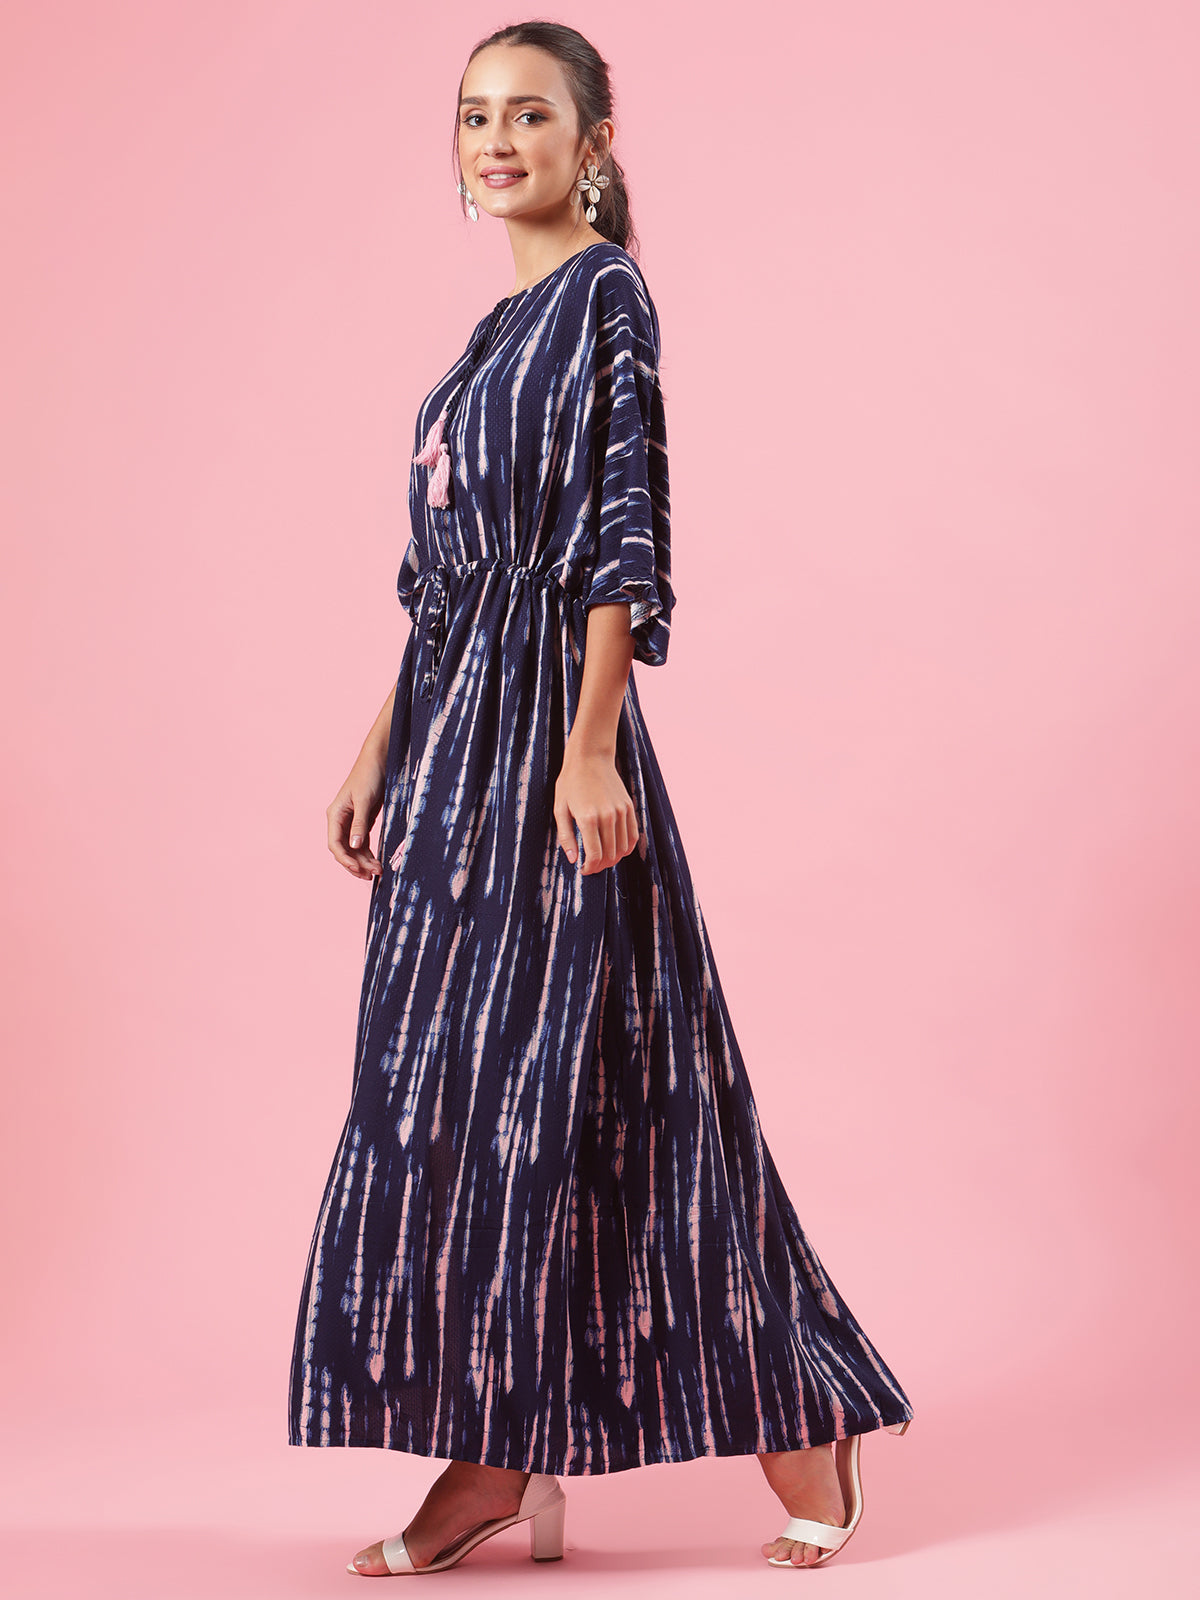 Shibori Tie and Dye Womens Summer Kaftan Dress with Tassles